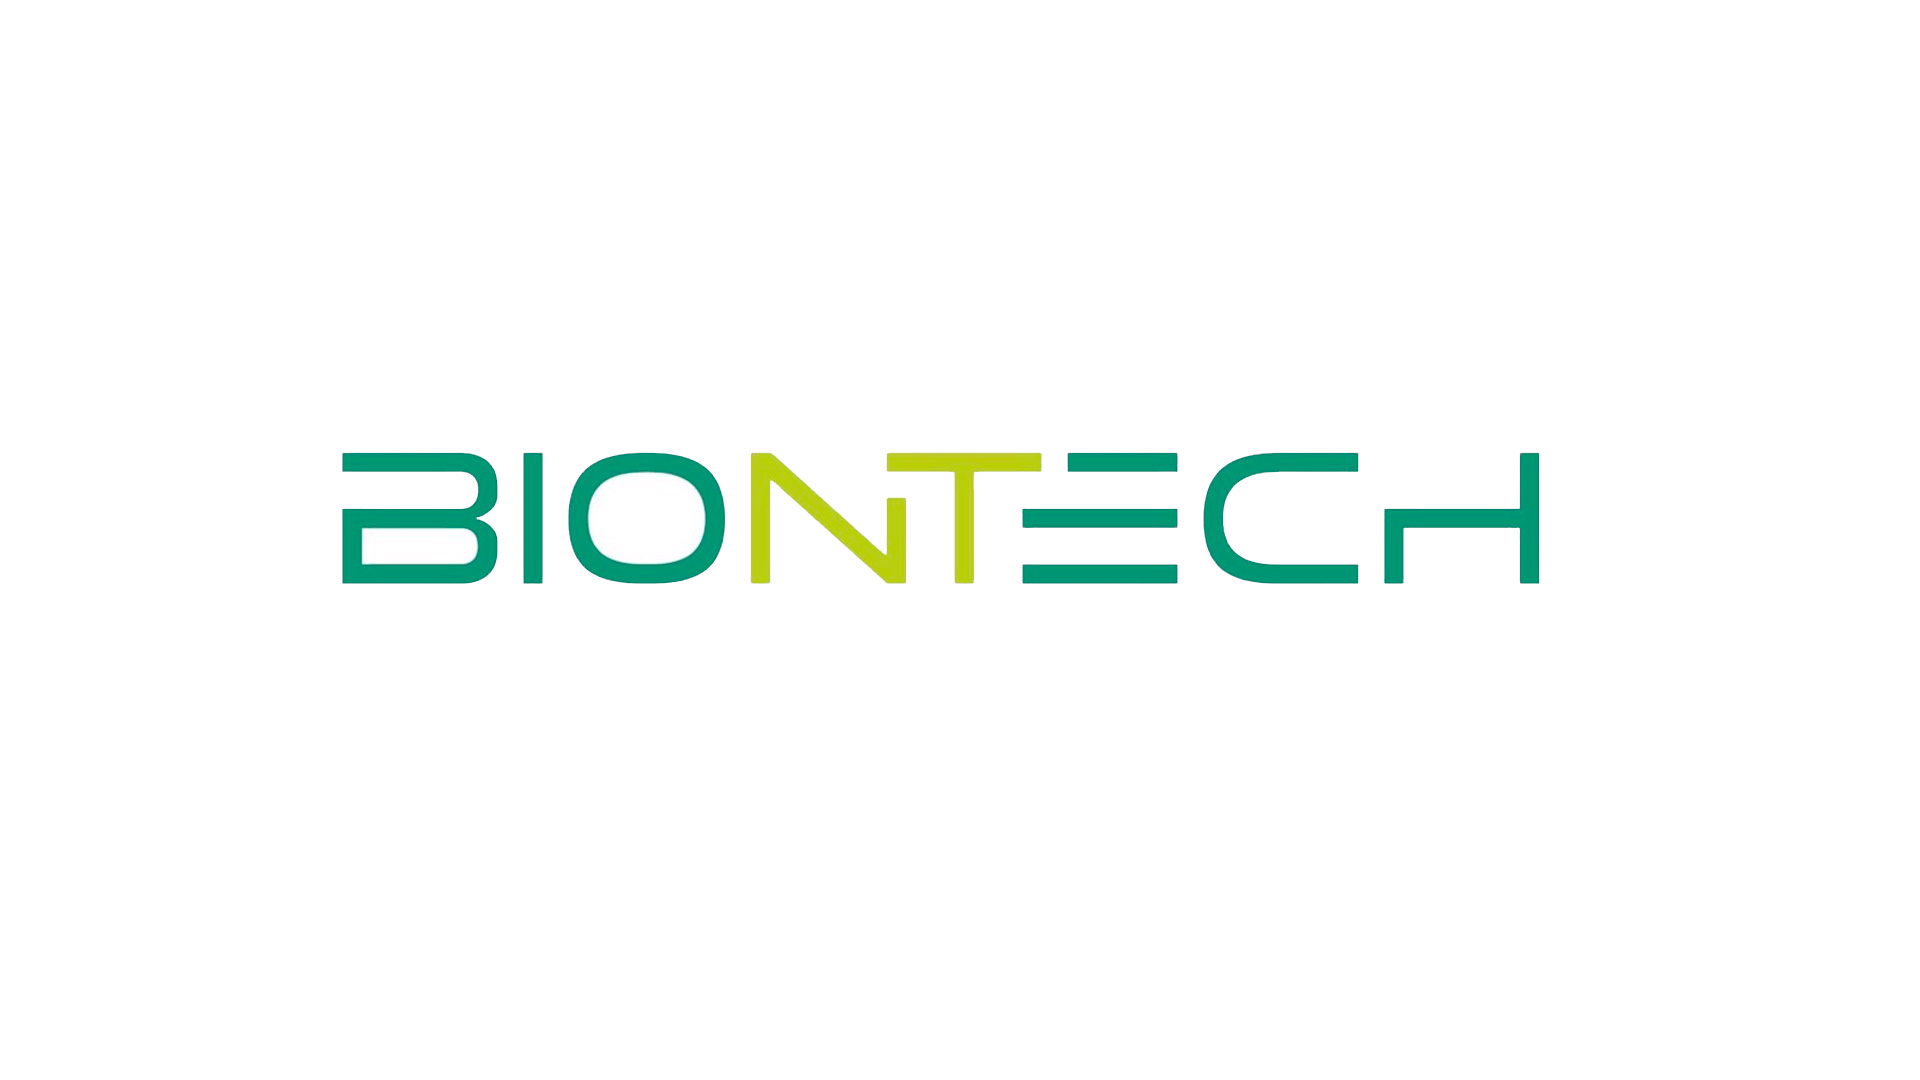 mejores-logos-farmaceutico-biontech-07